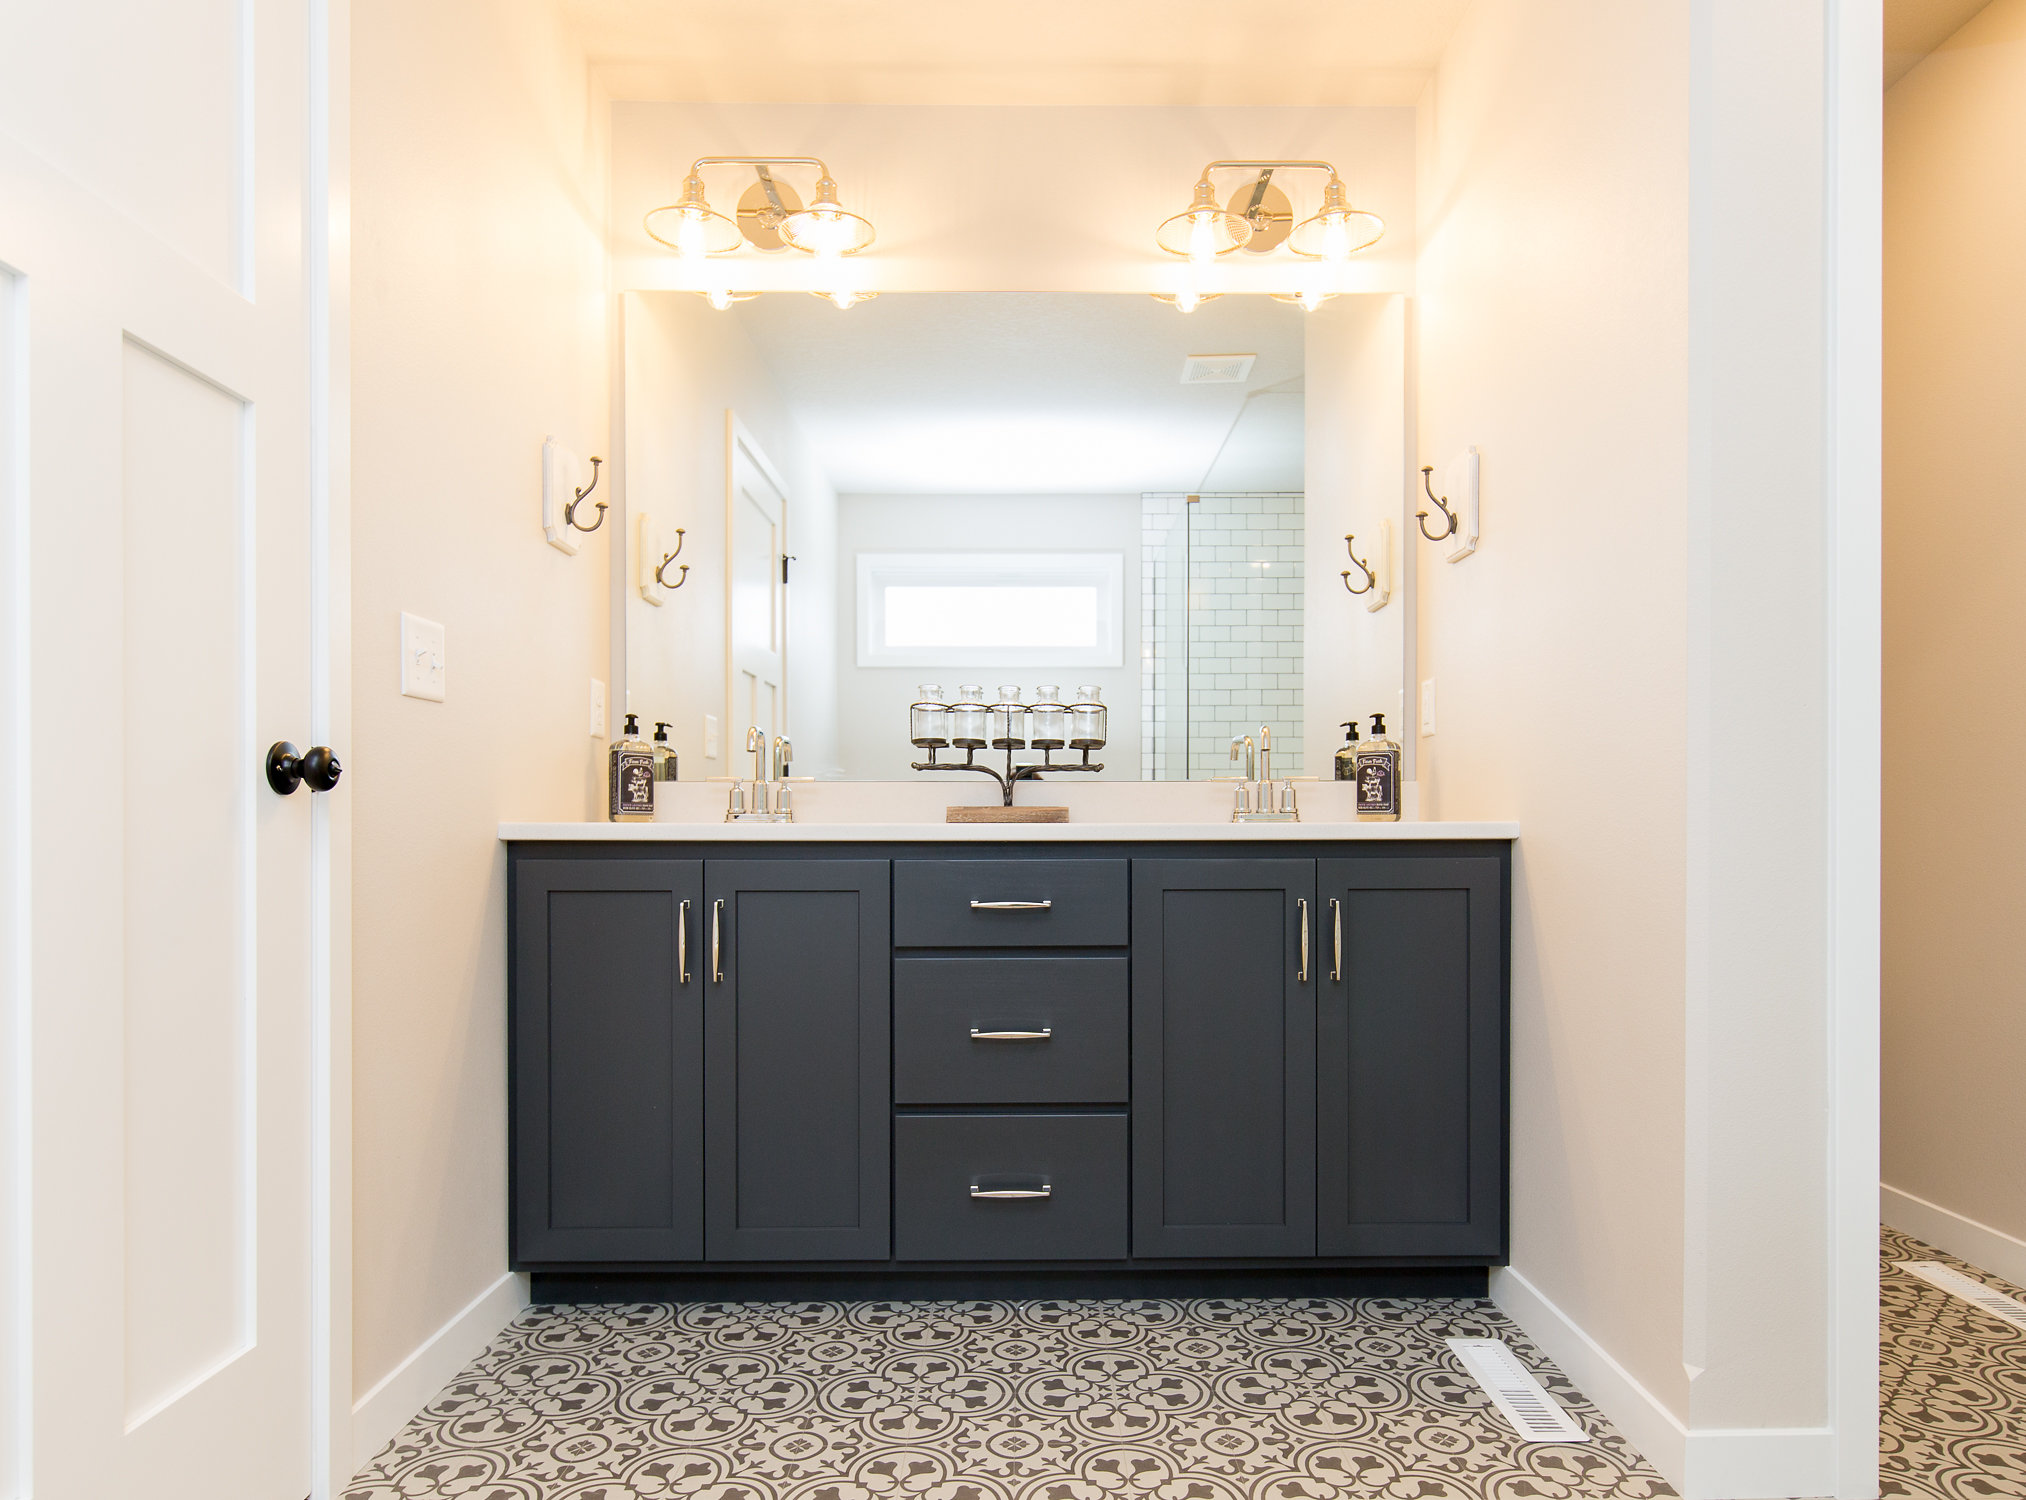 Blue bathroom cabinets and decorative flooring.jpg